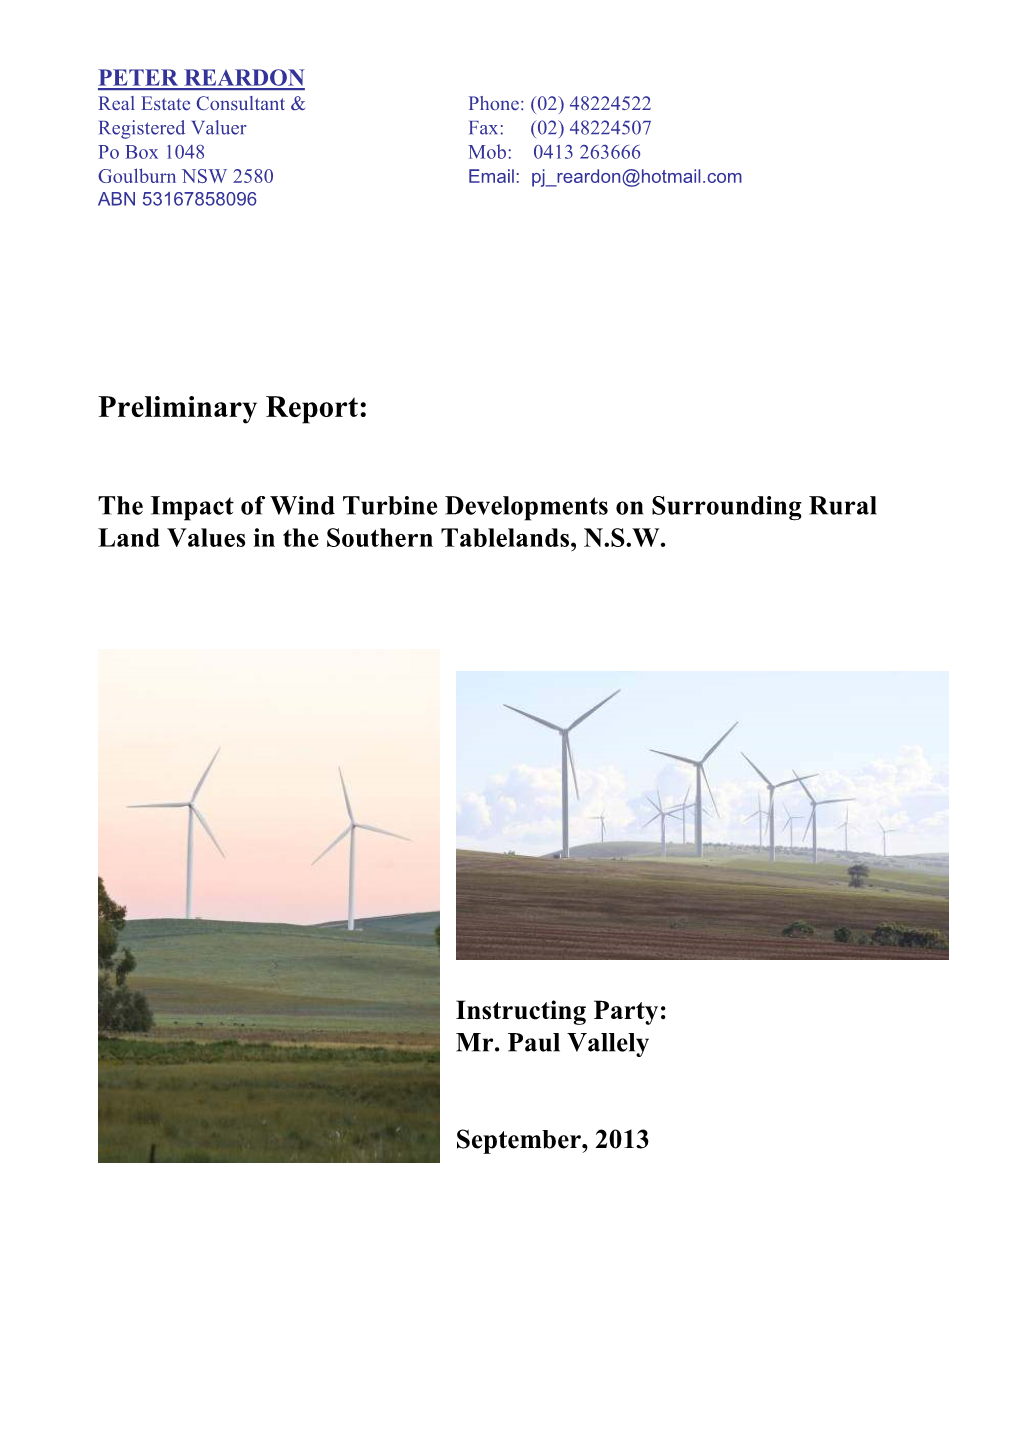 Impact of Wind Farm Development on Surrounding Rural Land Values 2013